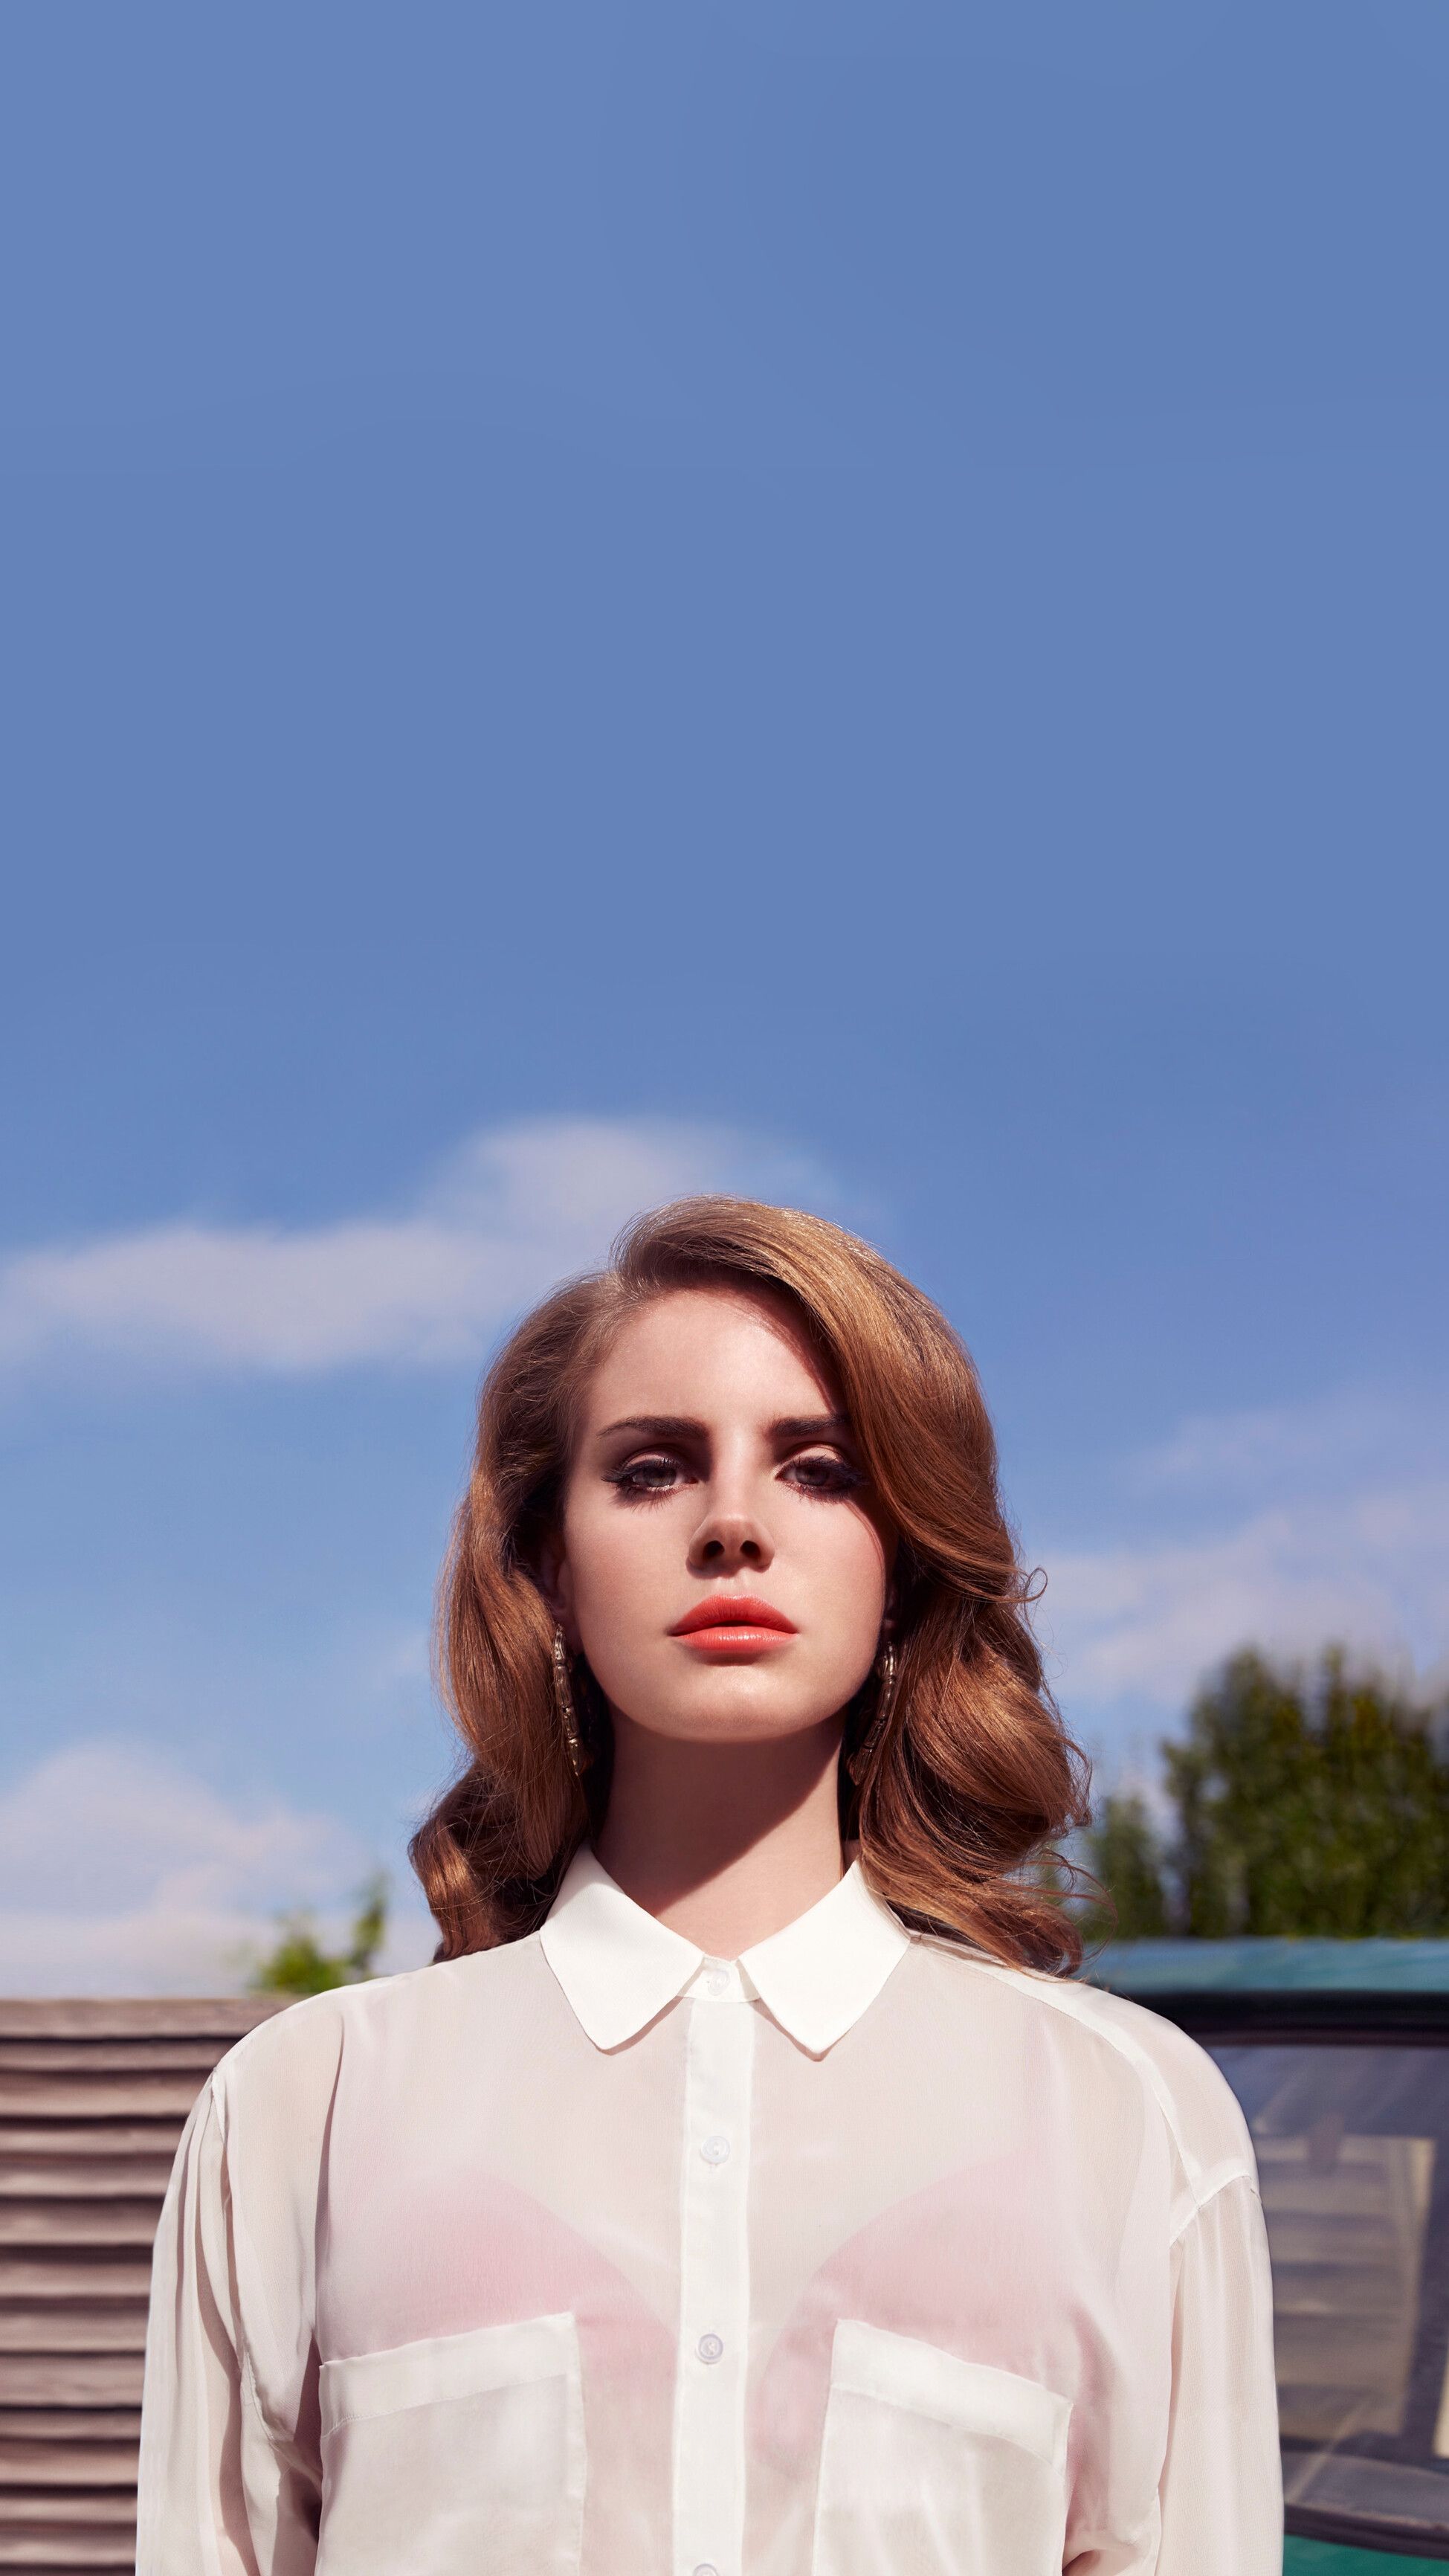 Lana Del Rey Wallpaper (image inside)